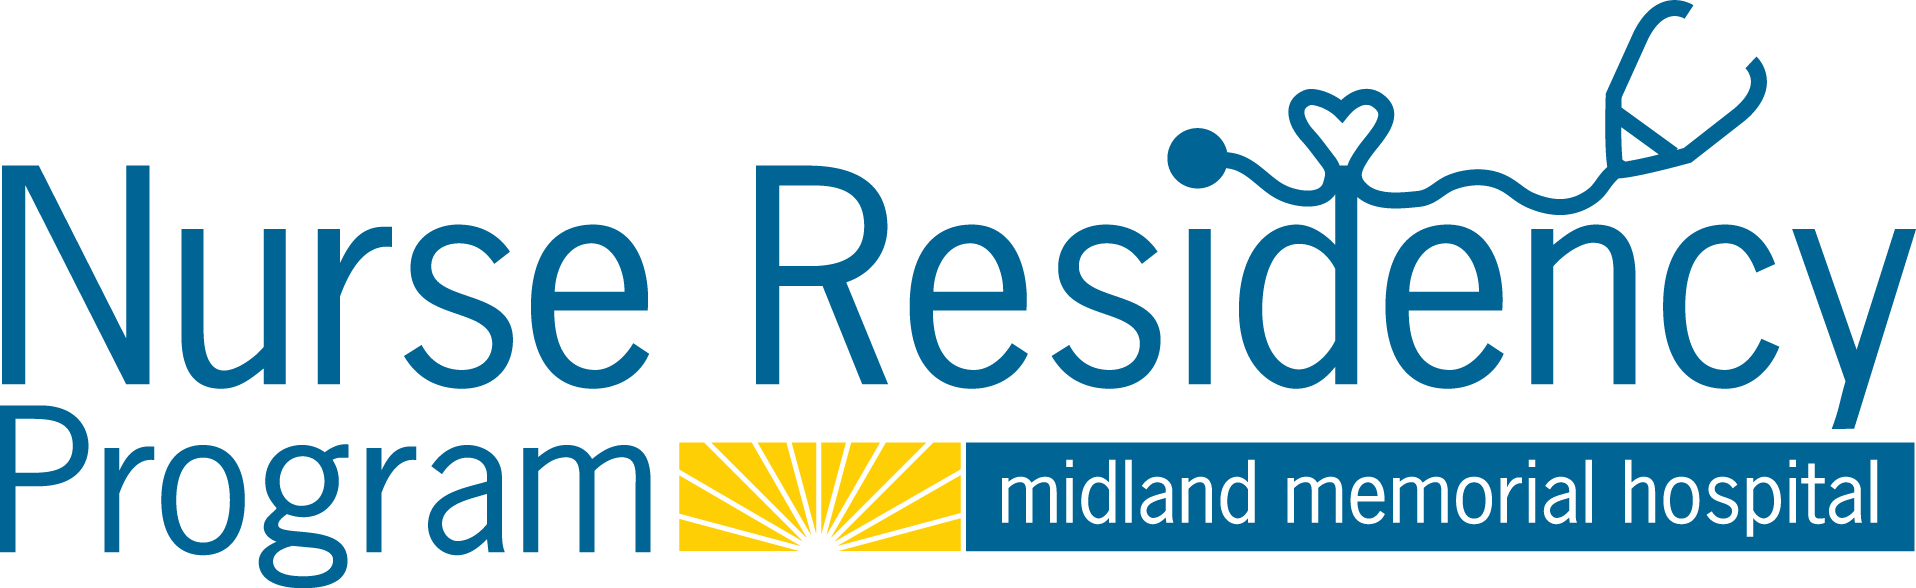 Midland Memorial Hospital Nurse Residency Program